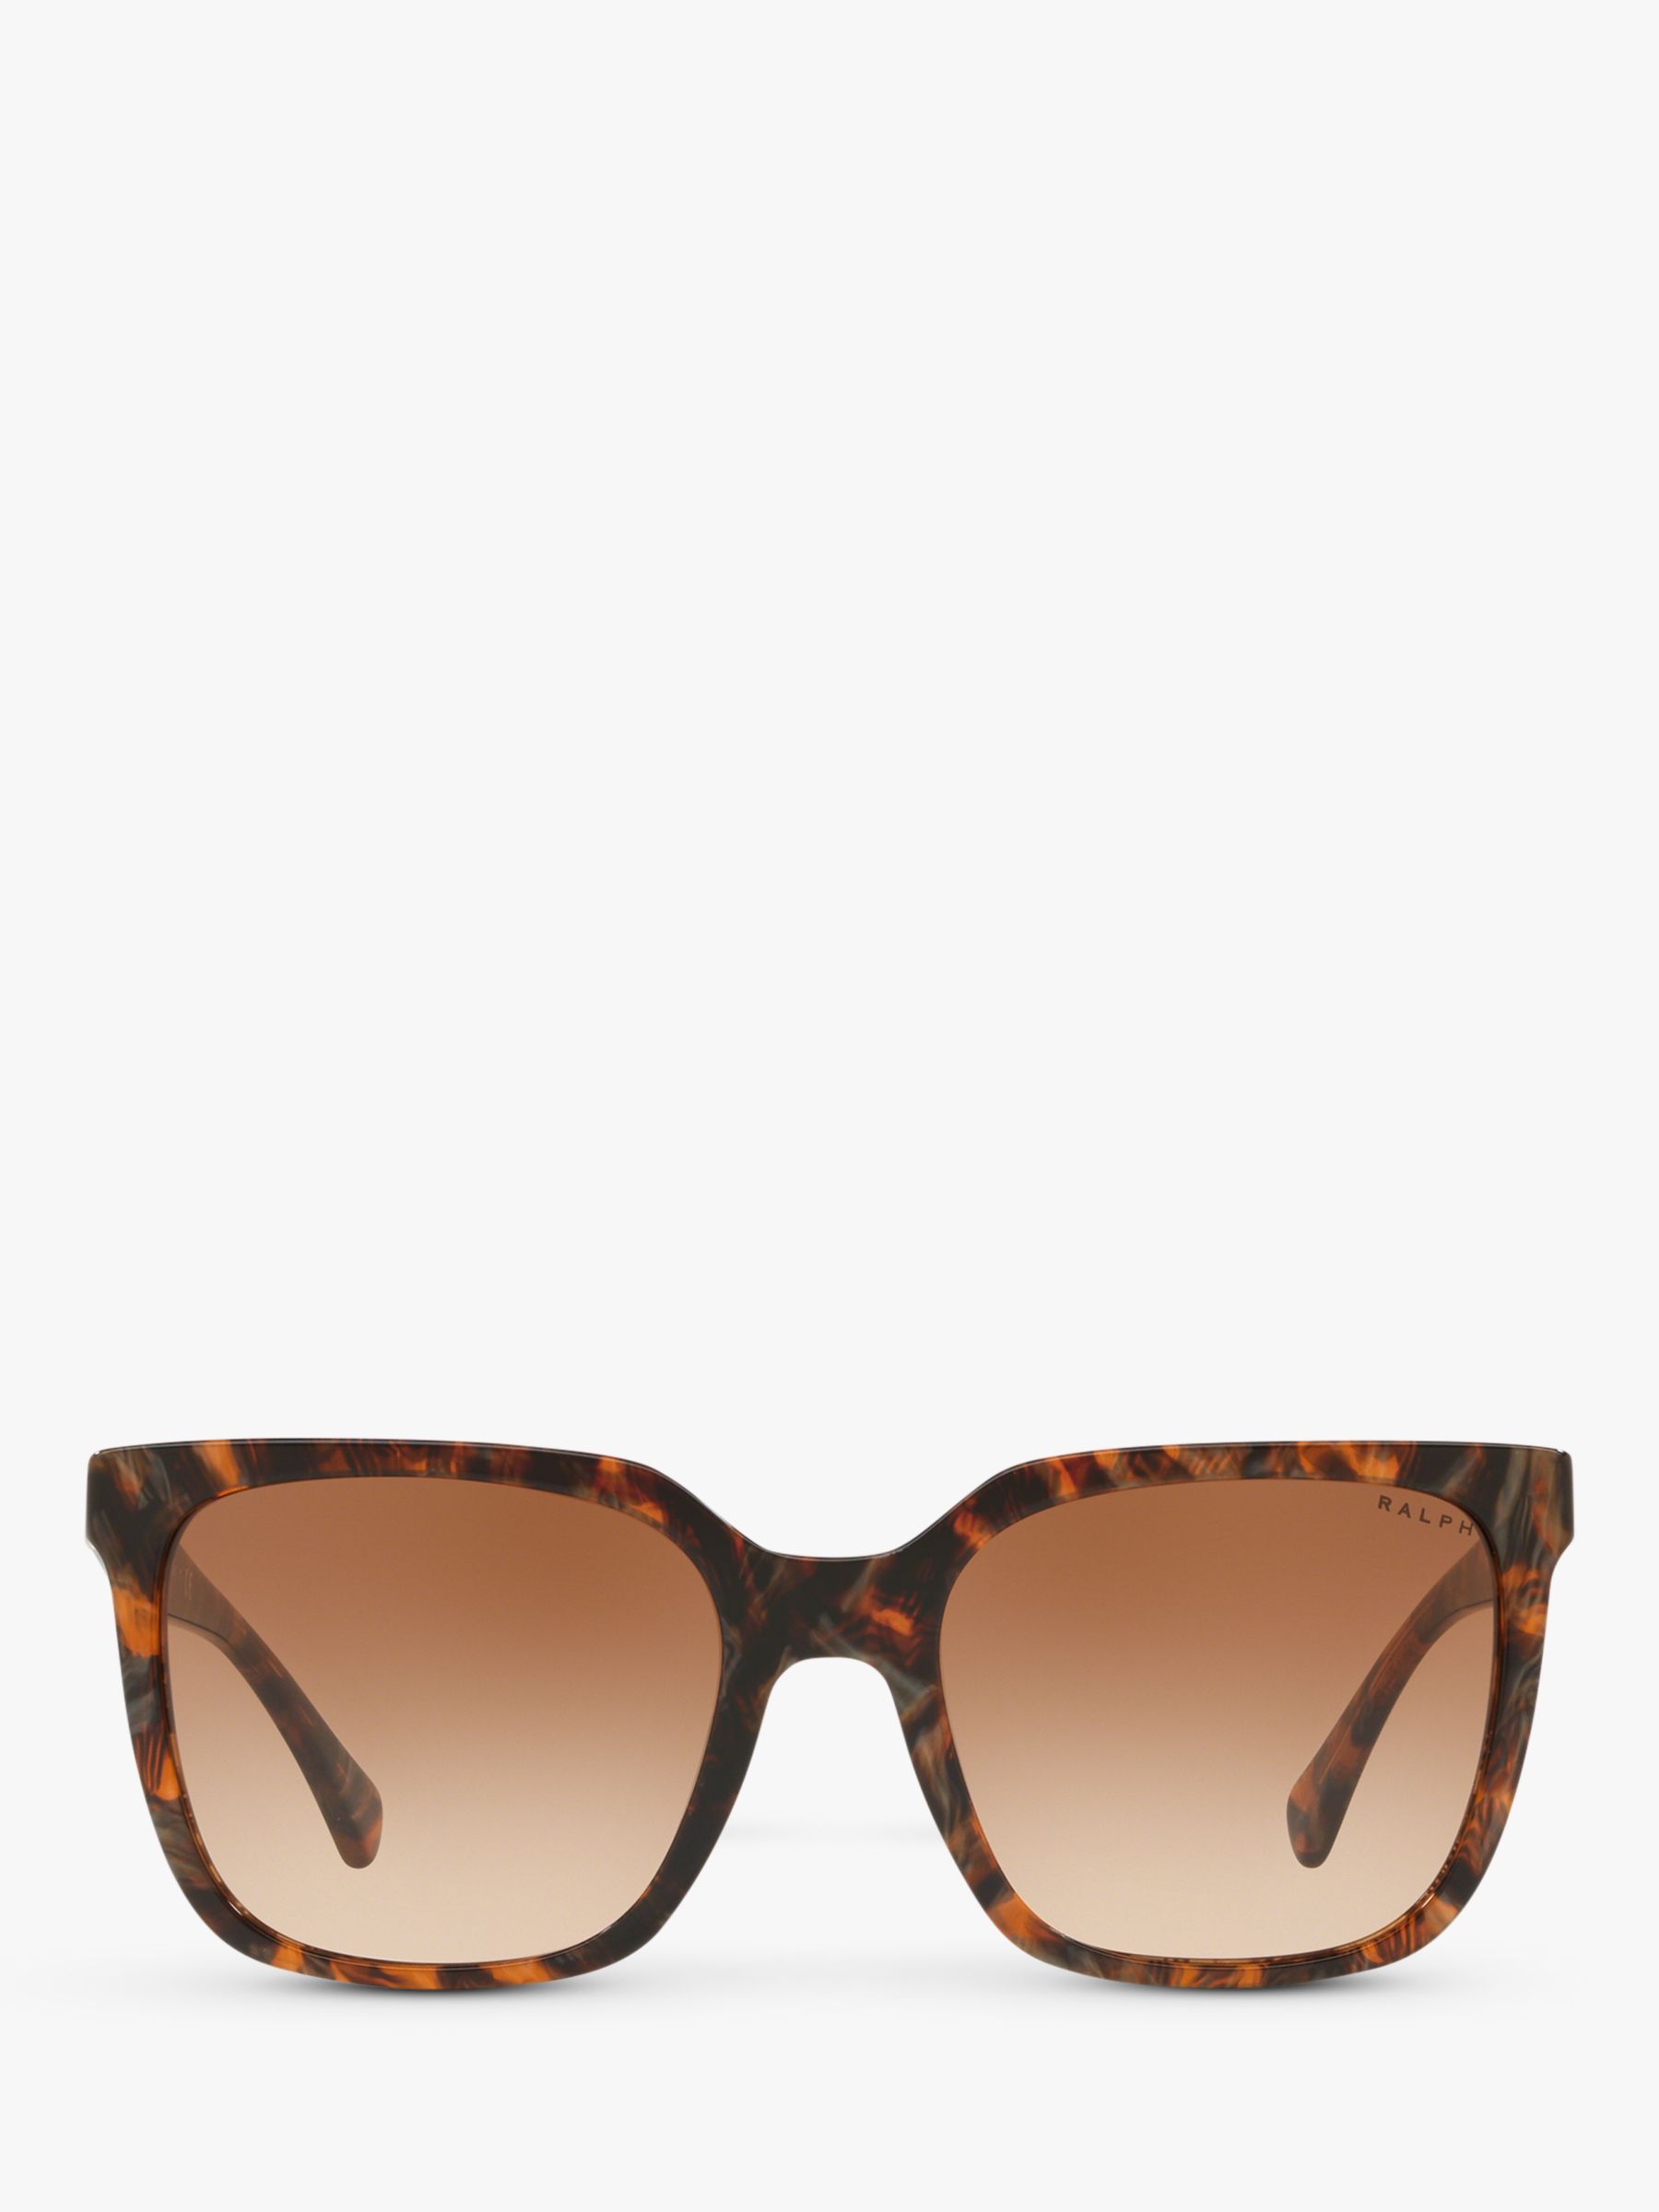 Polo Ralph Lauren RA5251 Women's Square Sunglasses, Brown Marble/Brown ...